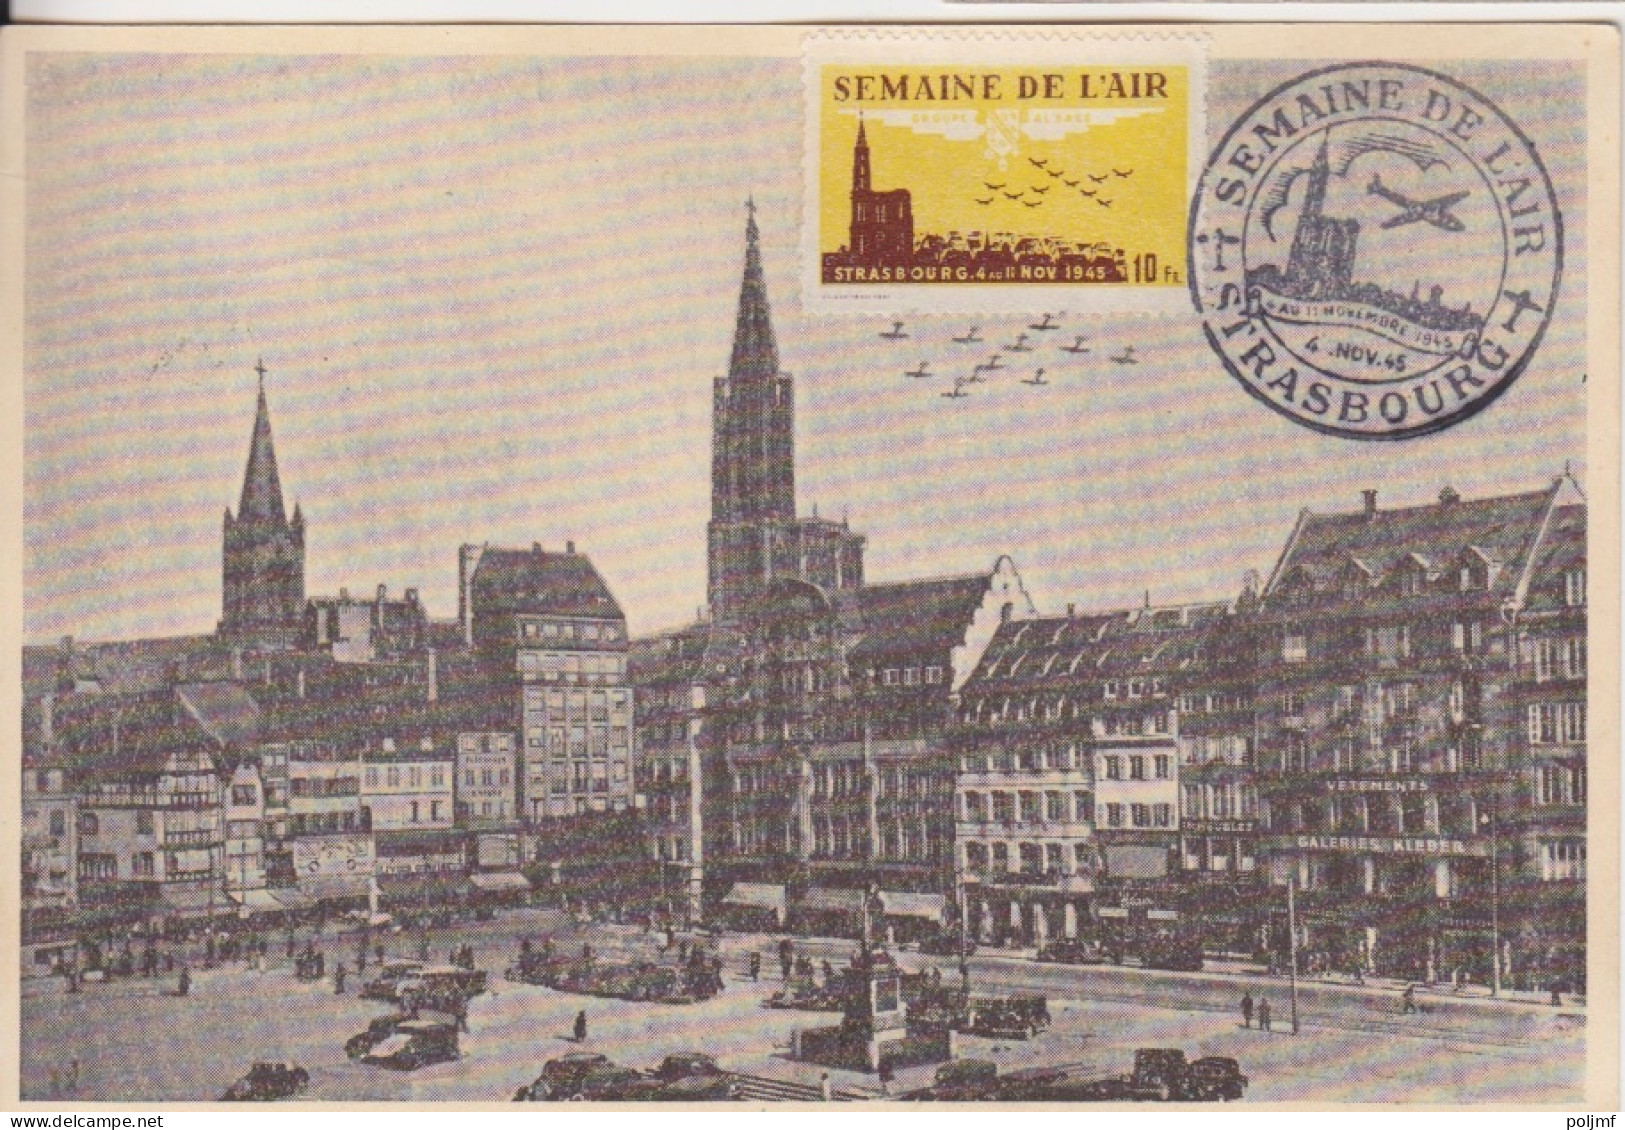 CP (Semaine De L'Air) Obl. GF Strasbourg Le 4 Nov 45 Sur 1f50 Dulac Rose N° 691 + Vignette Semaine De L'Air - 1944-45 Marianne (Dulac)